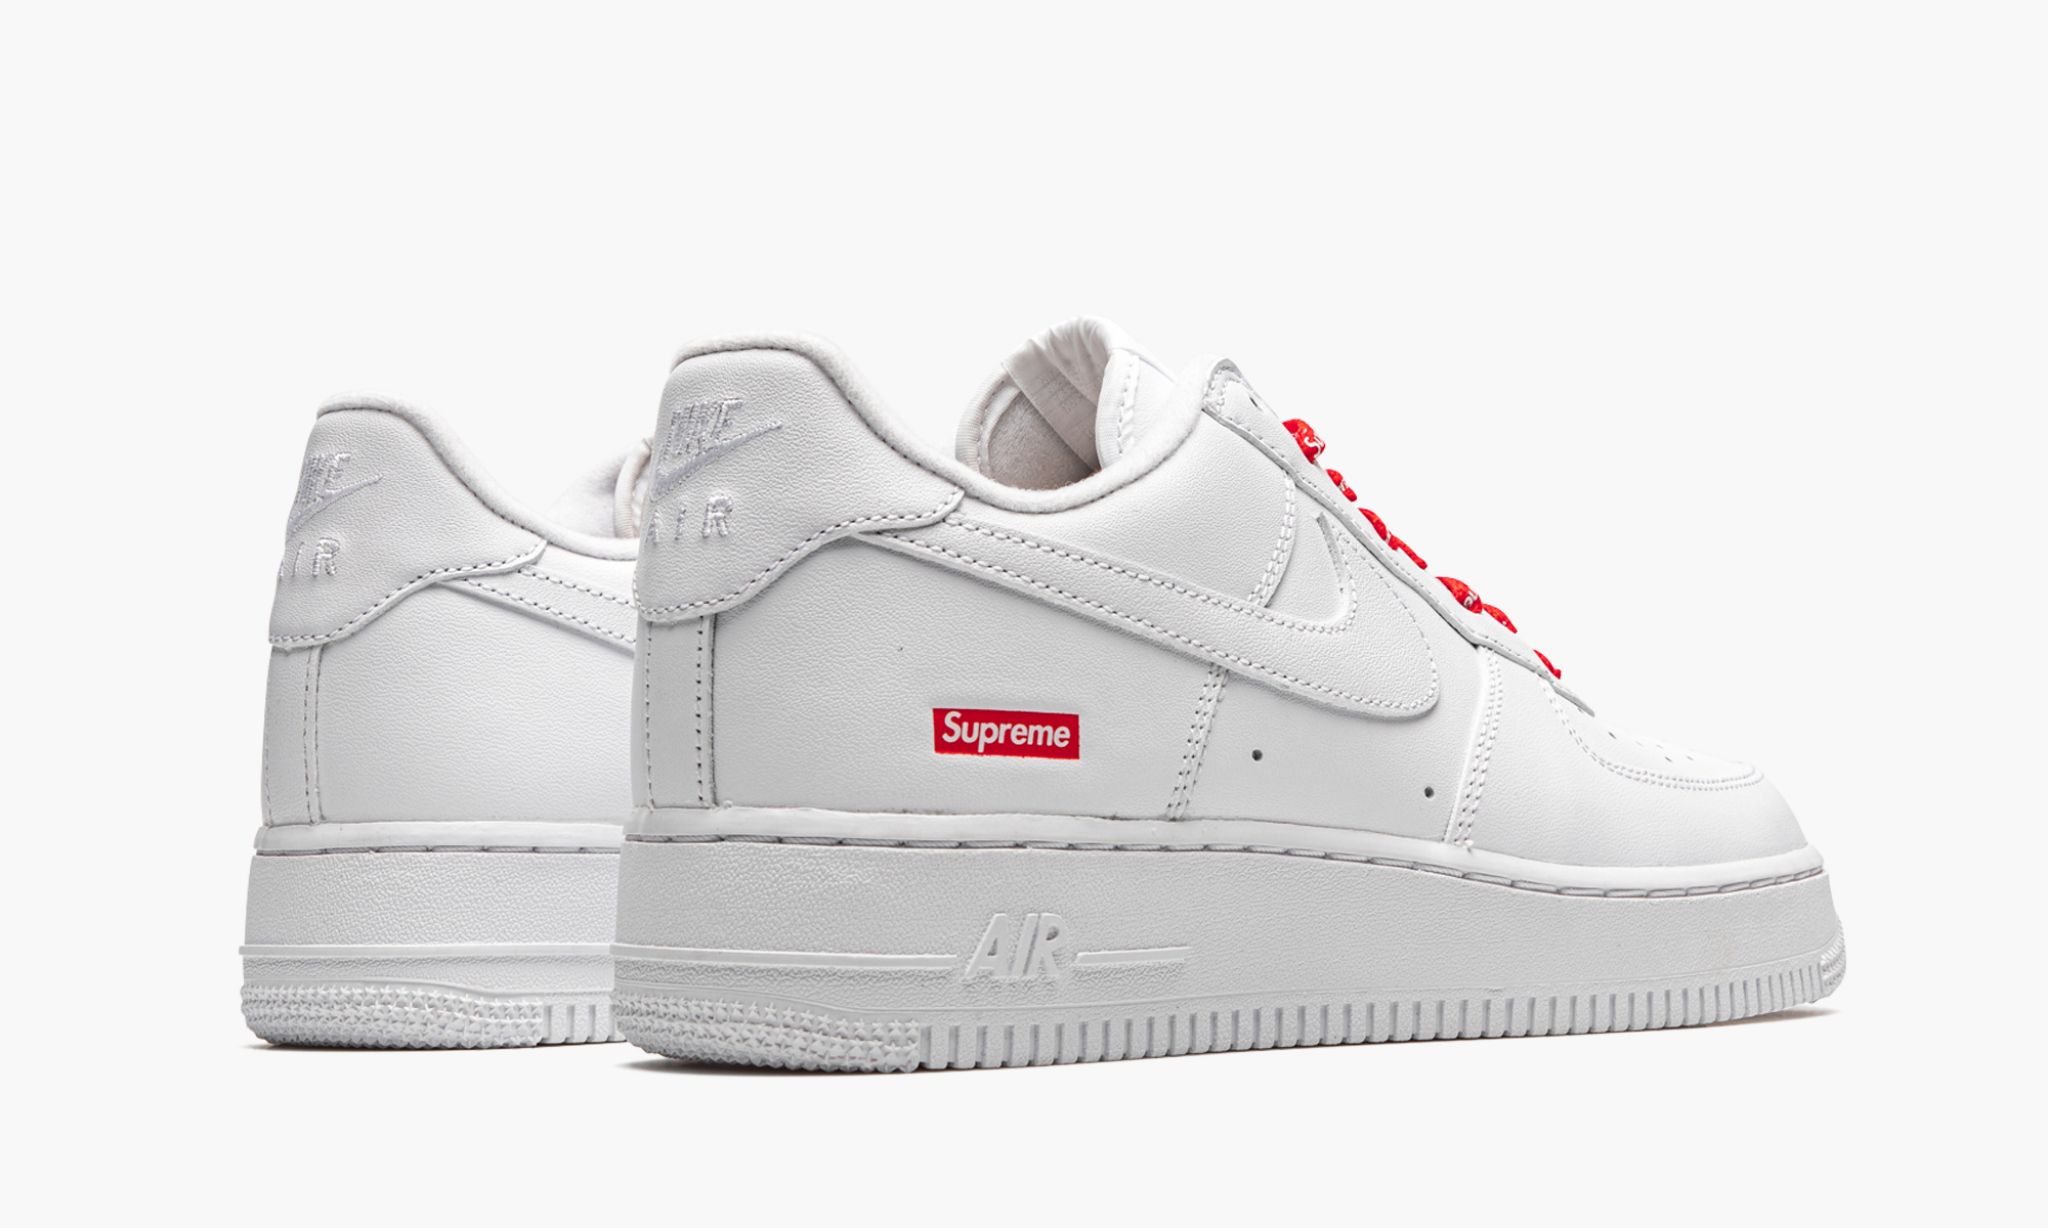 Nike Air 1 Supreme White | The Sneaker